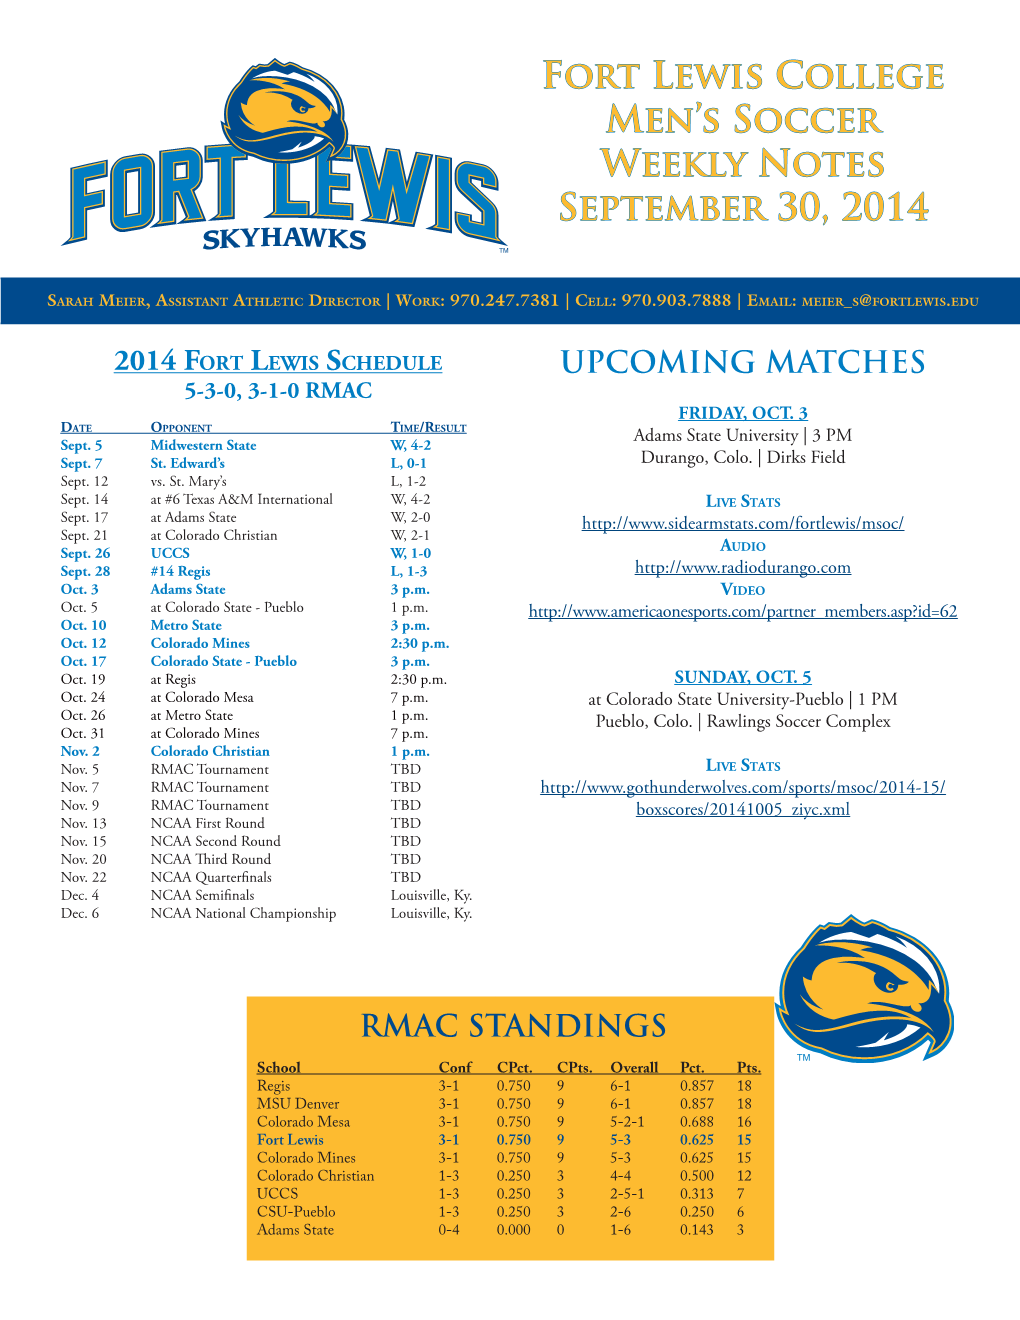 Fort Lewis College Men's Soccer Weekly Notes September 30, 2014